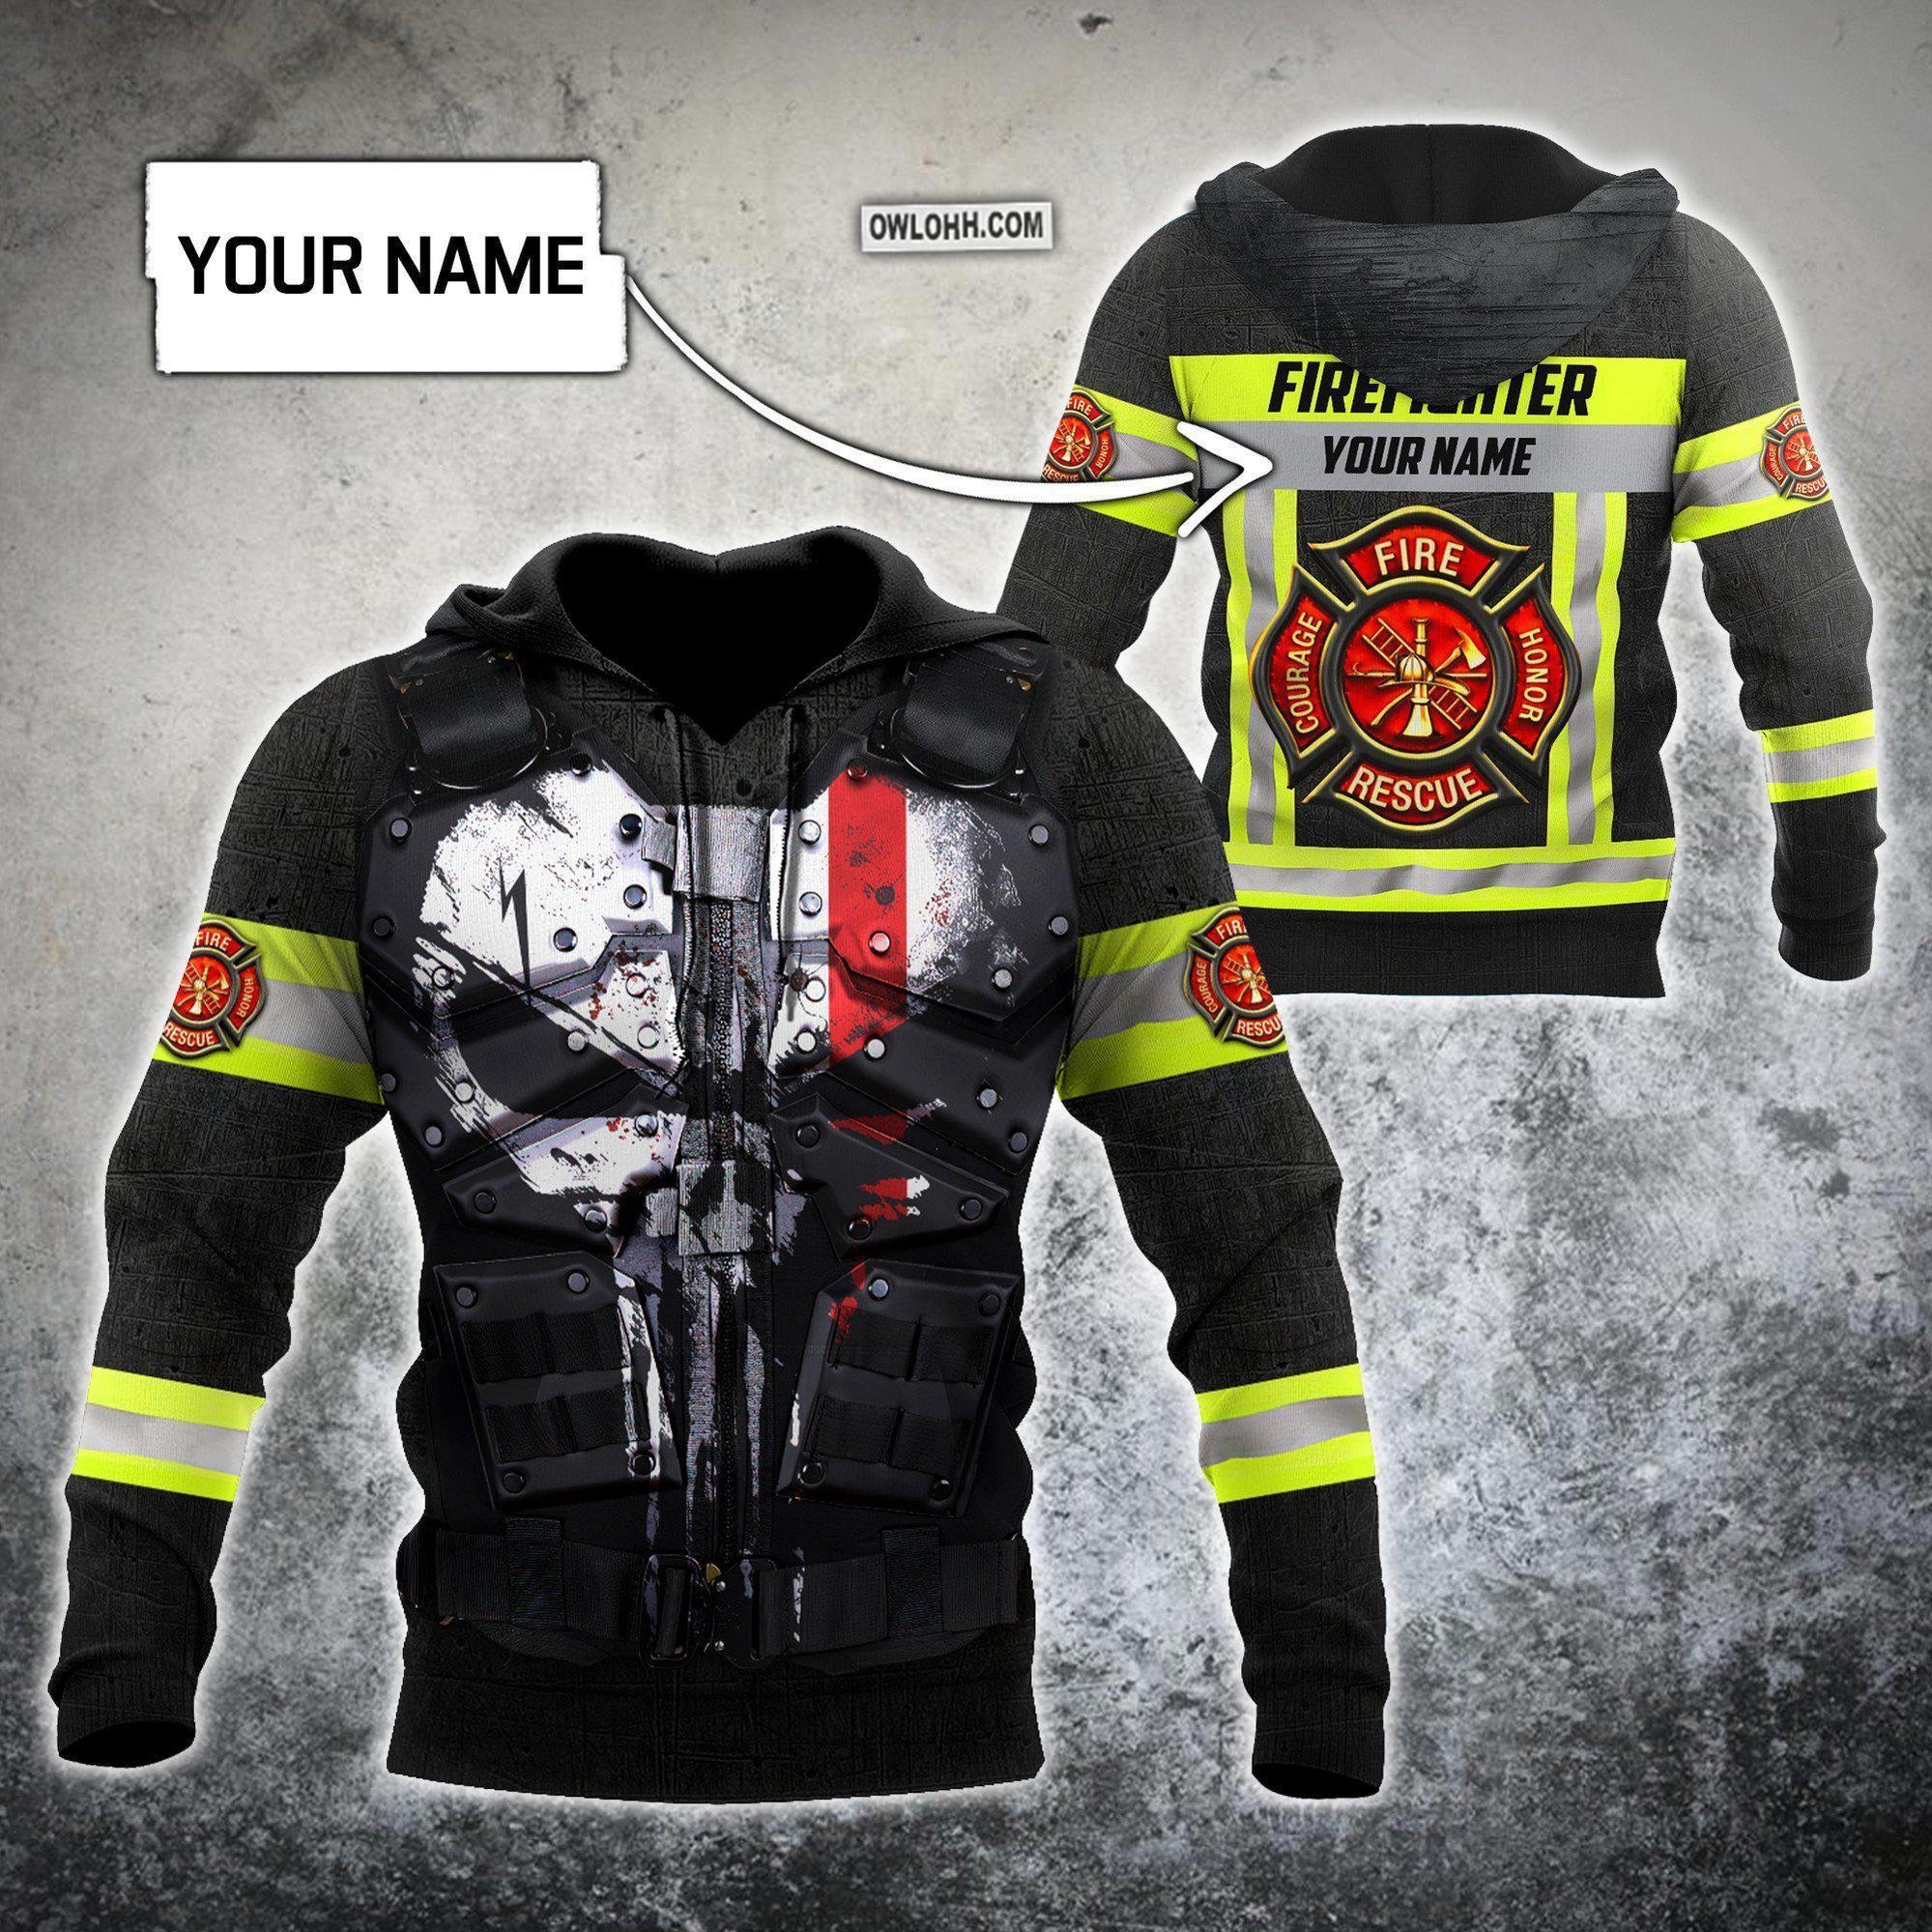 Customize Name Firefighter Hoodie Shirts For Men And Women MH05122004 - HOOD01NGA031221